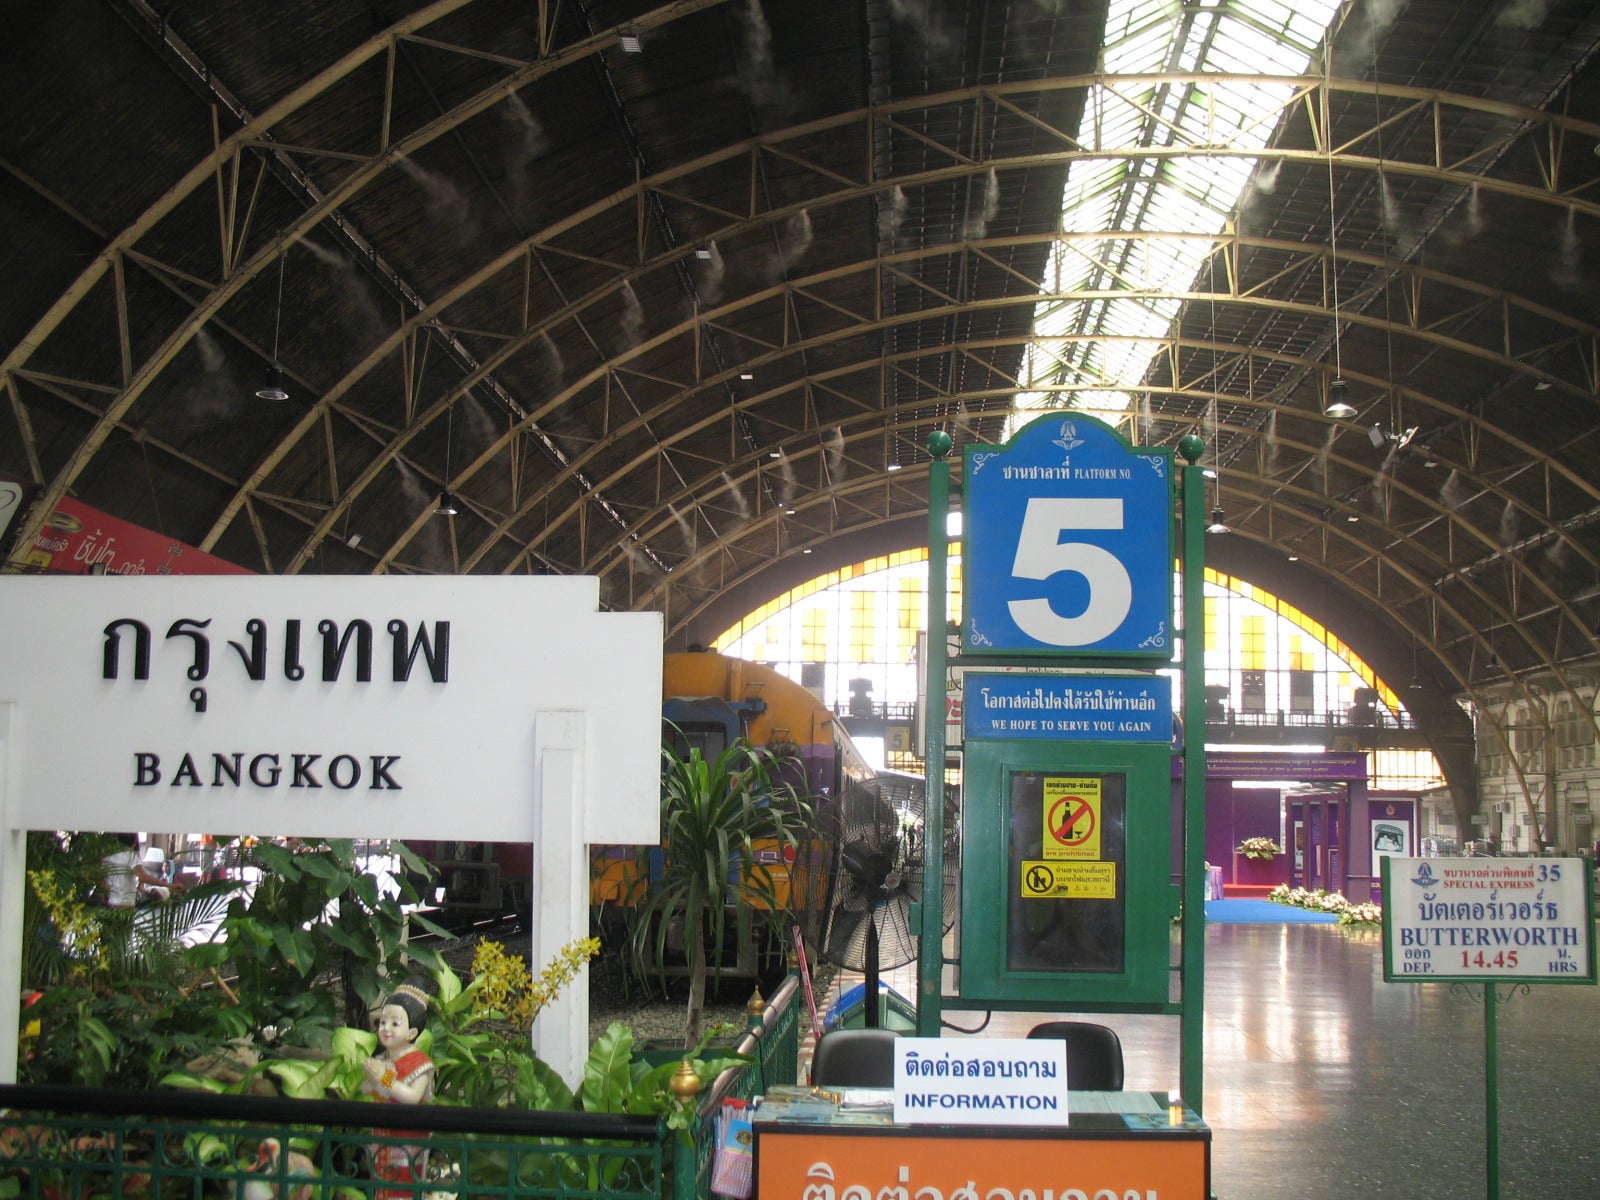 Hua Lamphong Train Station Bangkok To Butterworth Train